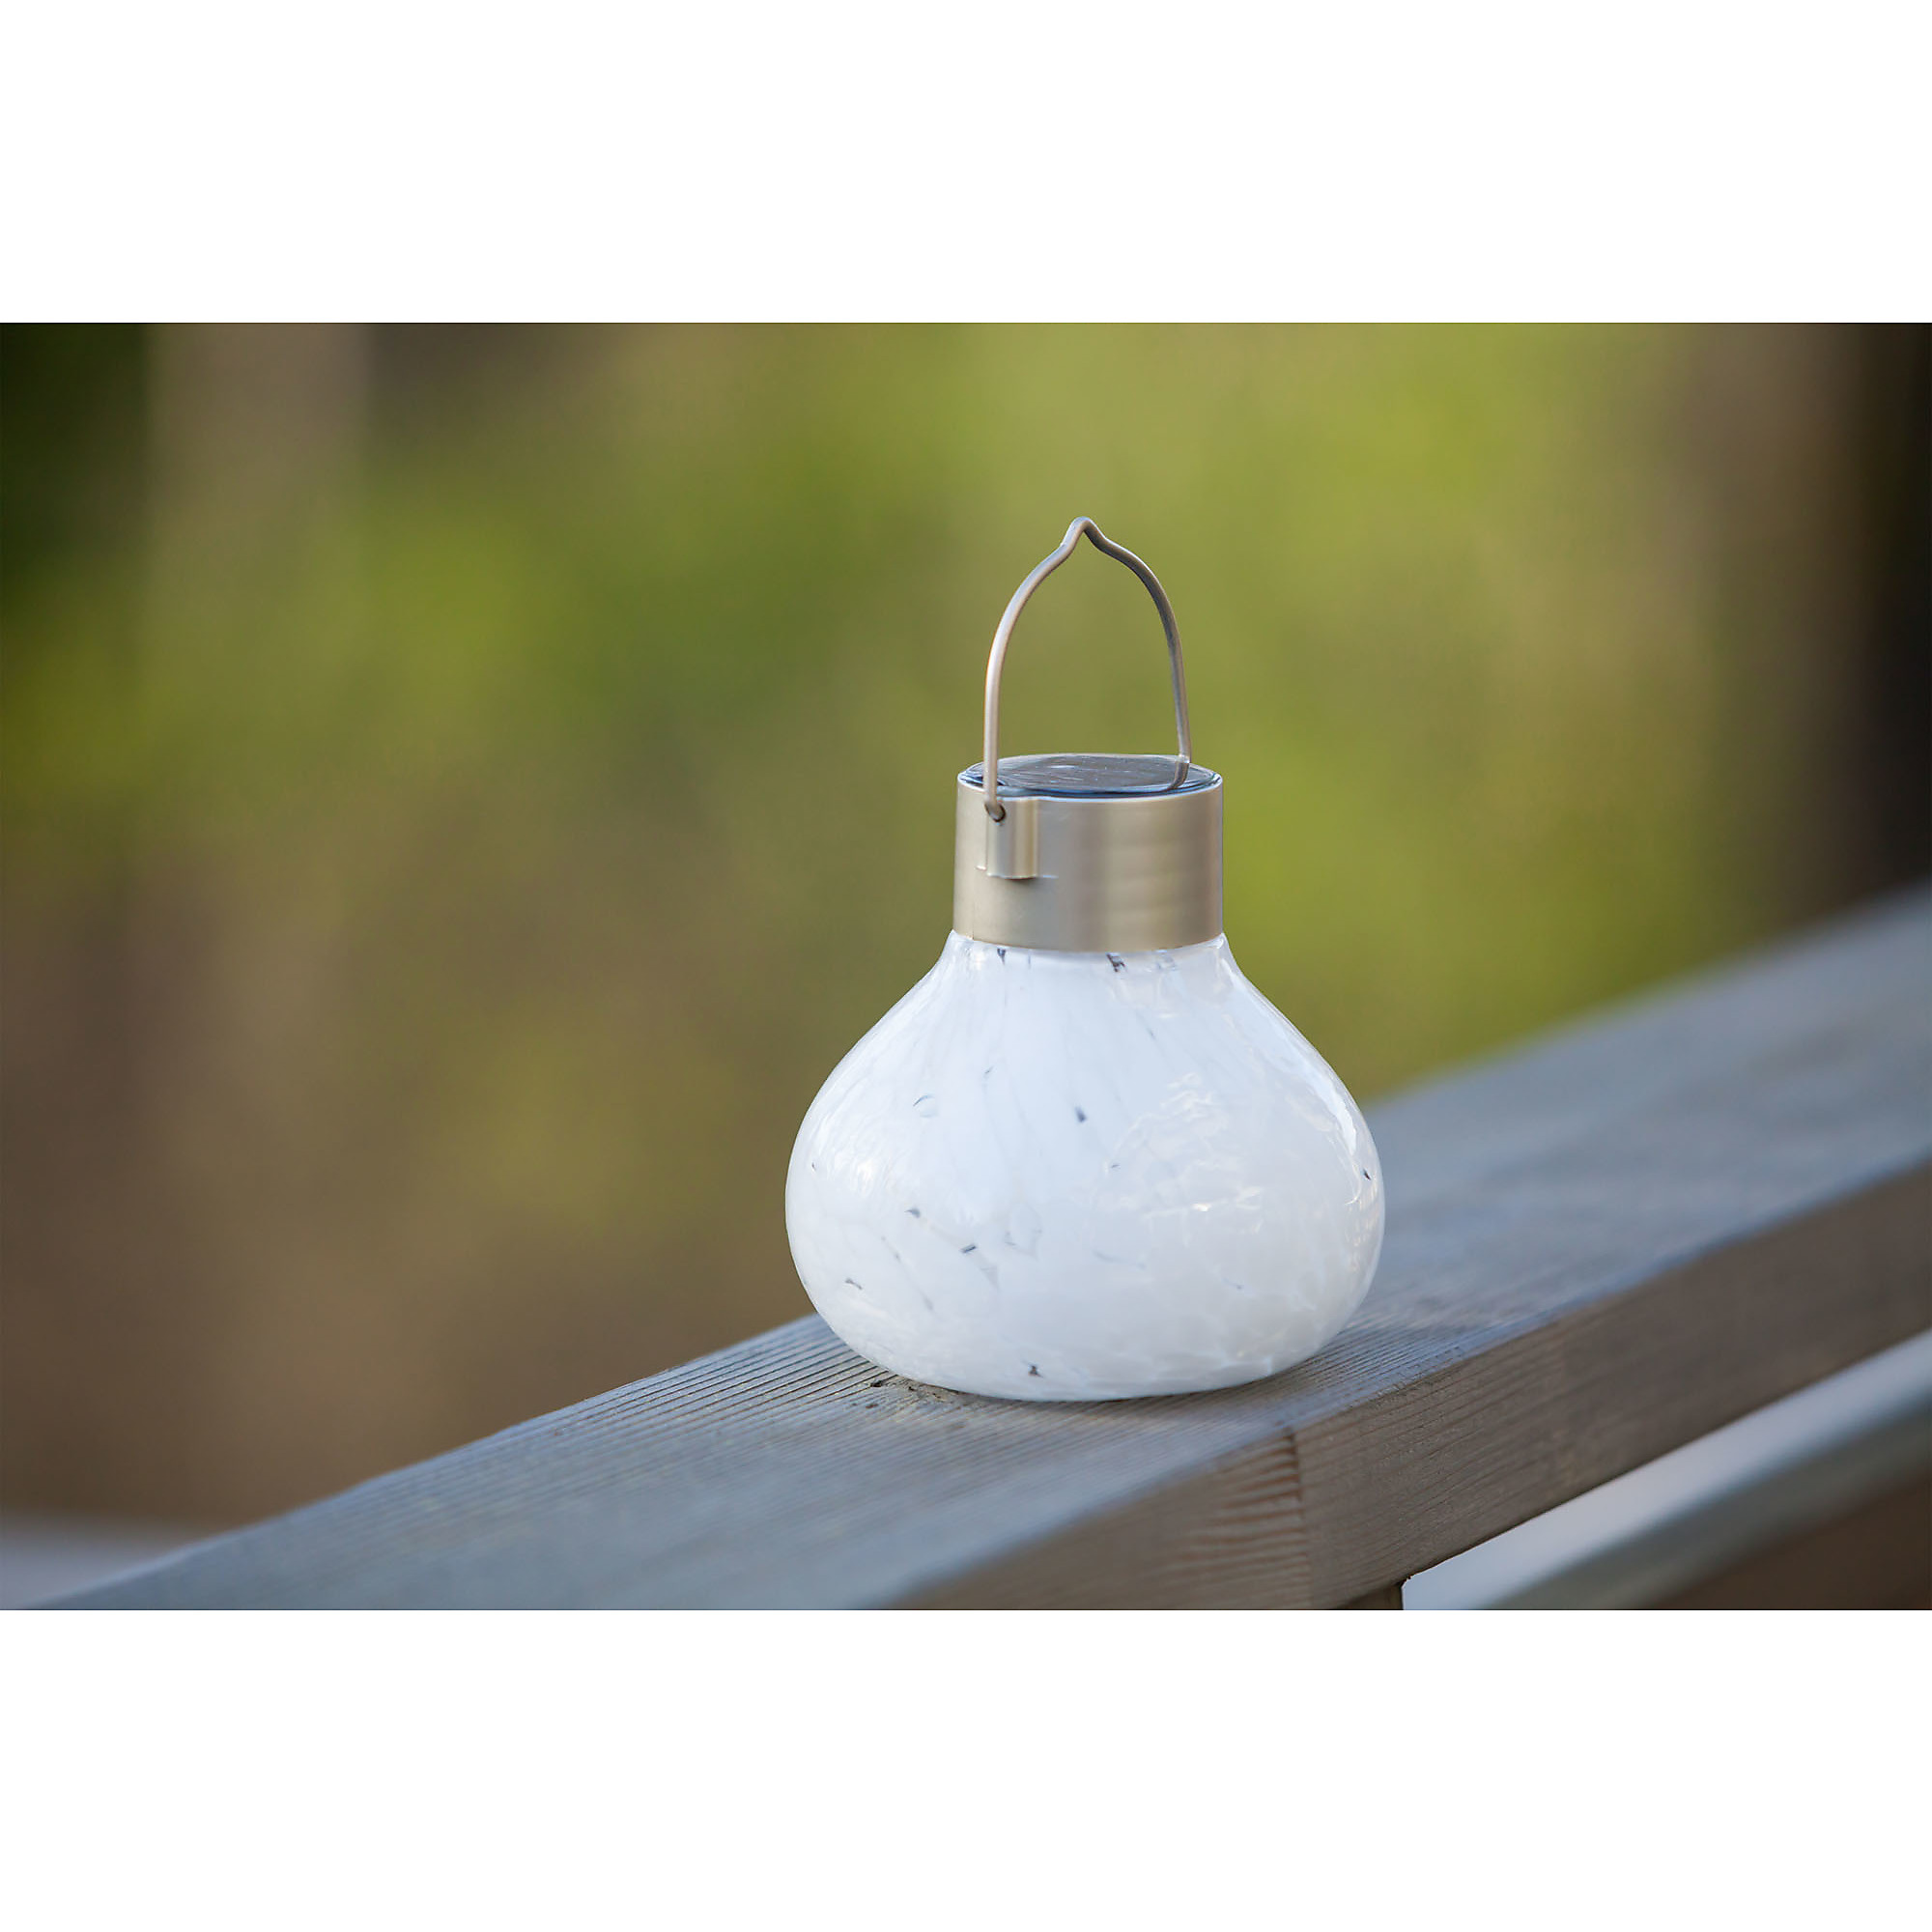 Allsop Home and Garden, Solar Glass Tea Lantern - White, Color White, Included (qty.) 1 Model 30454